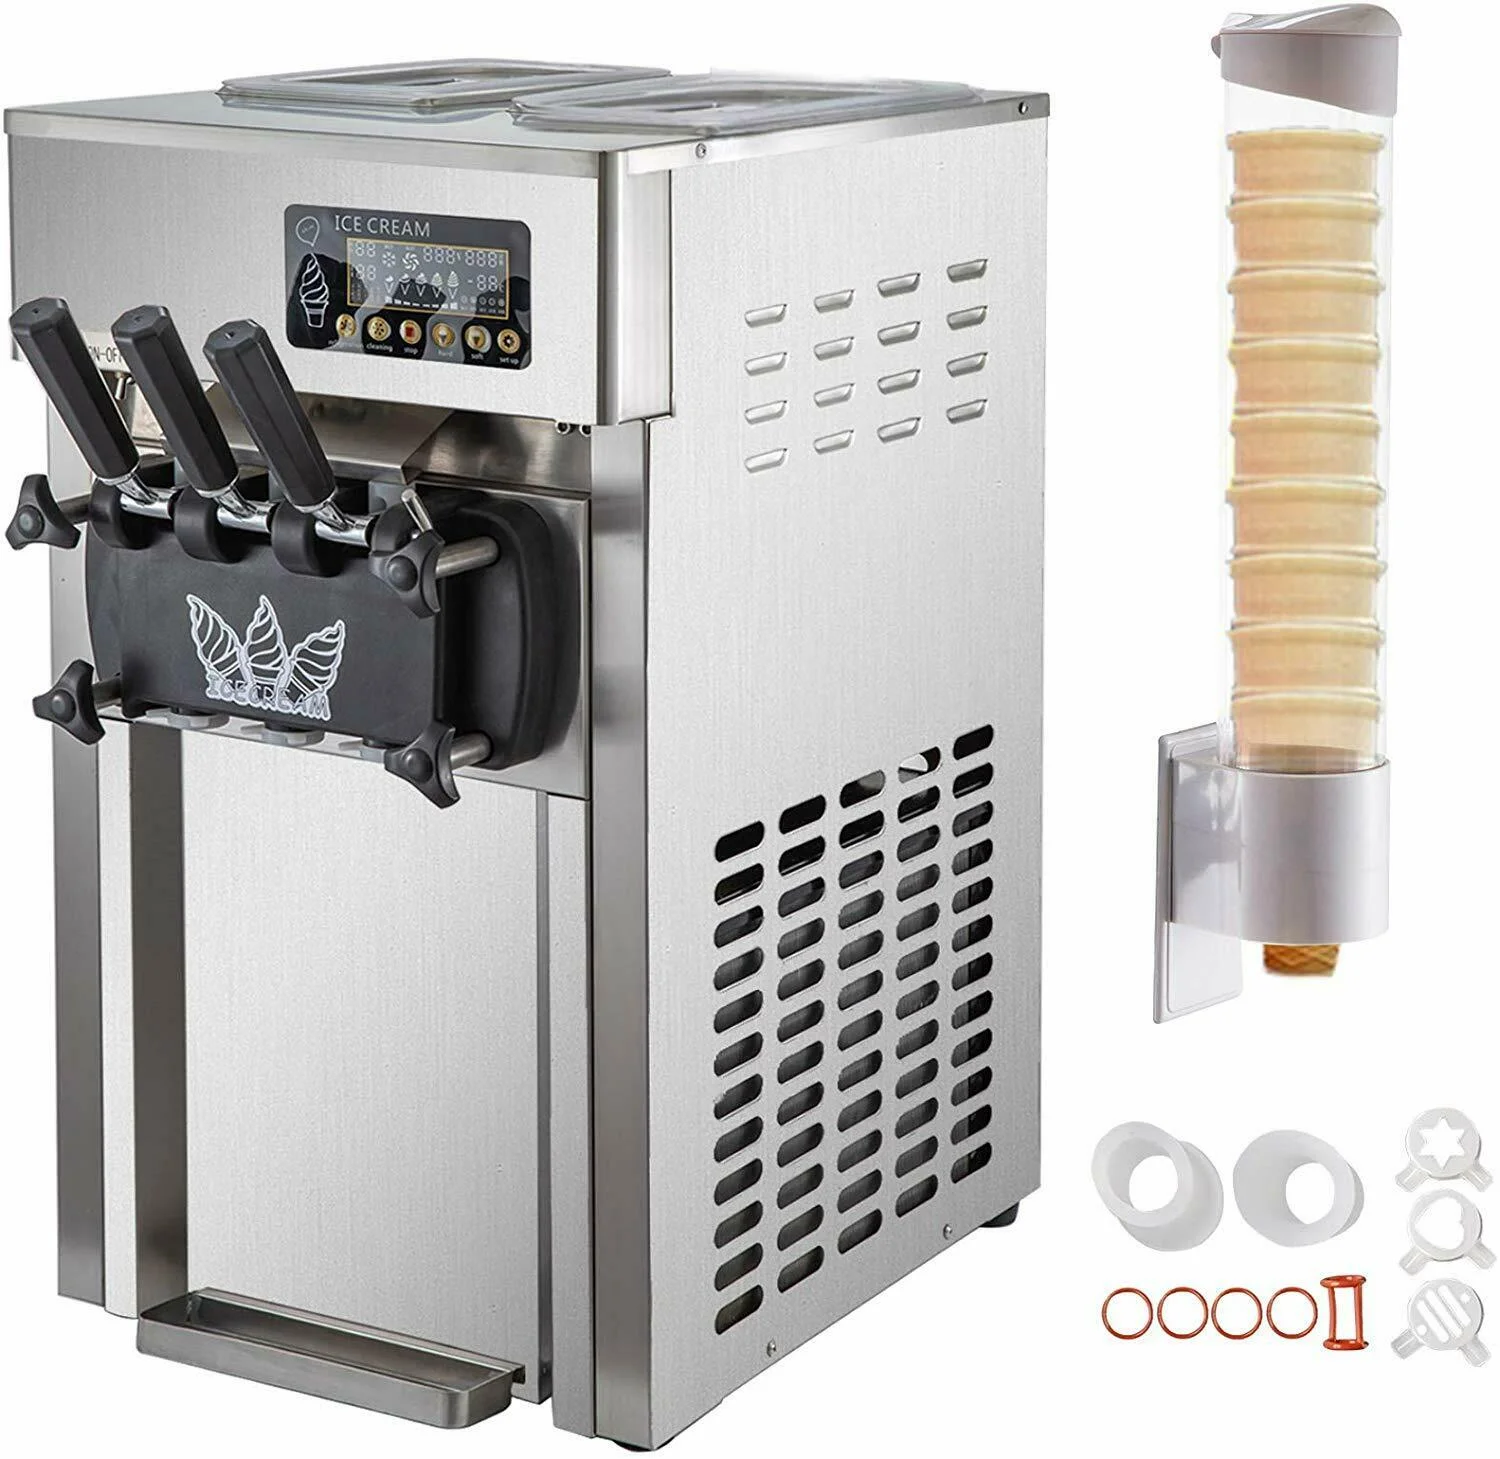 multi-function small maker liquid nitrogen ice cream paper cone making machine with reasonable price